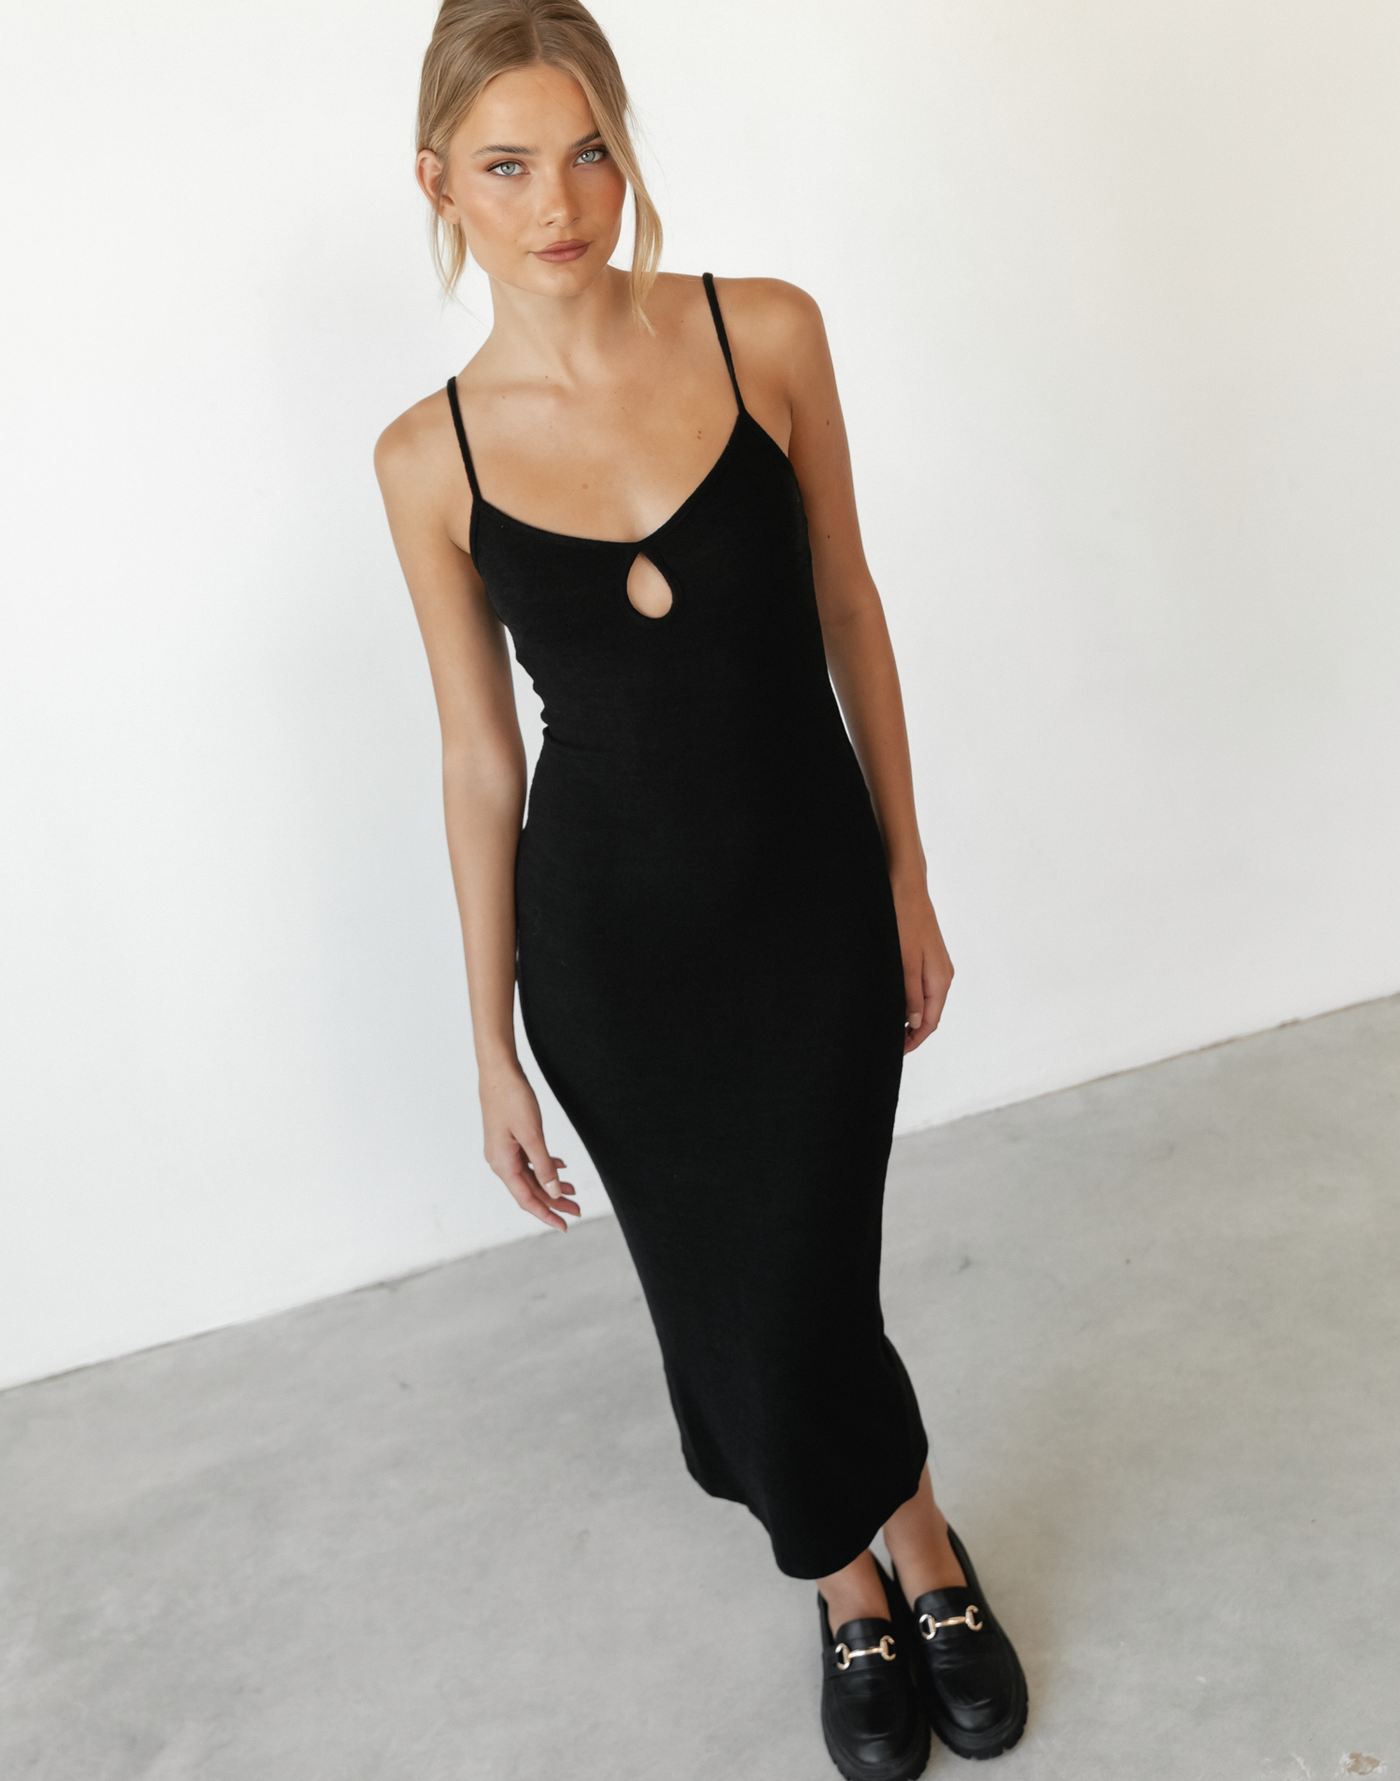 Mccarthy Midi Dress (Black) - Black Midi Dress - Women's Dress - Charcoal Clothing